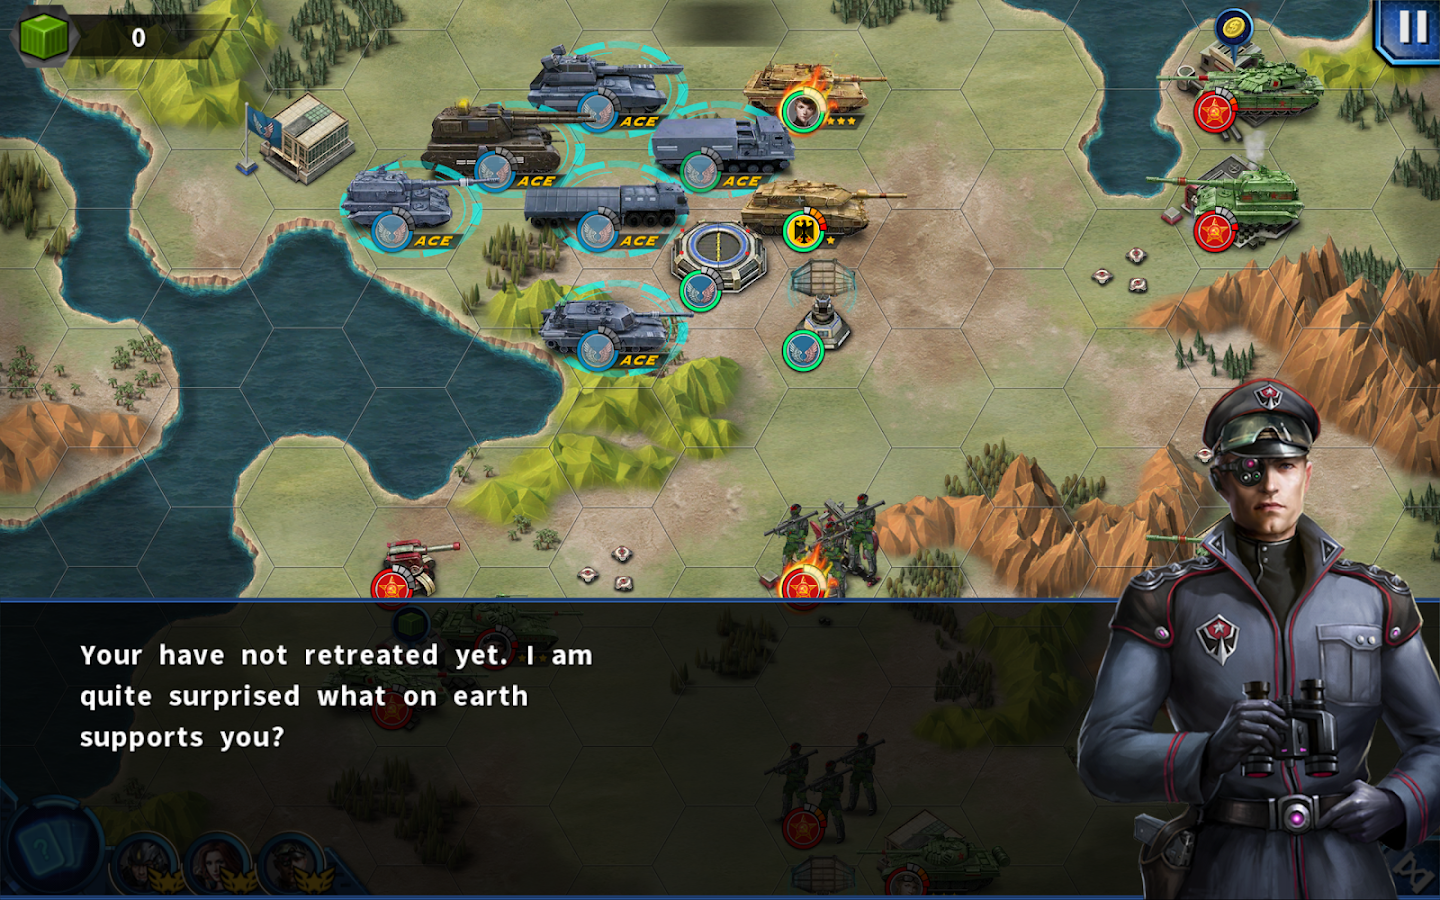    Glory of Generals2: ACE- screenshot  